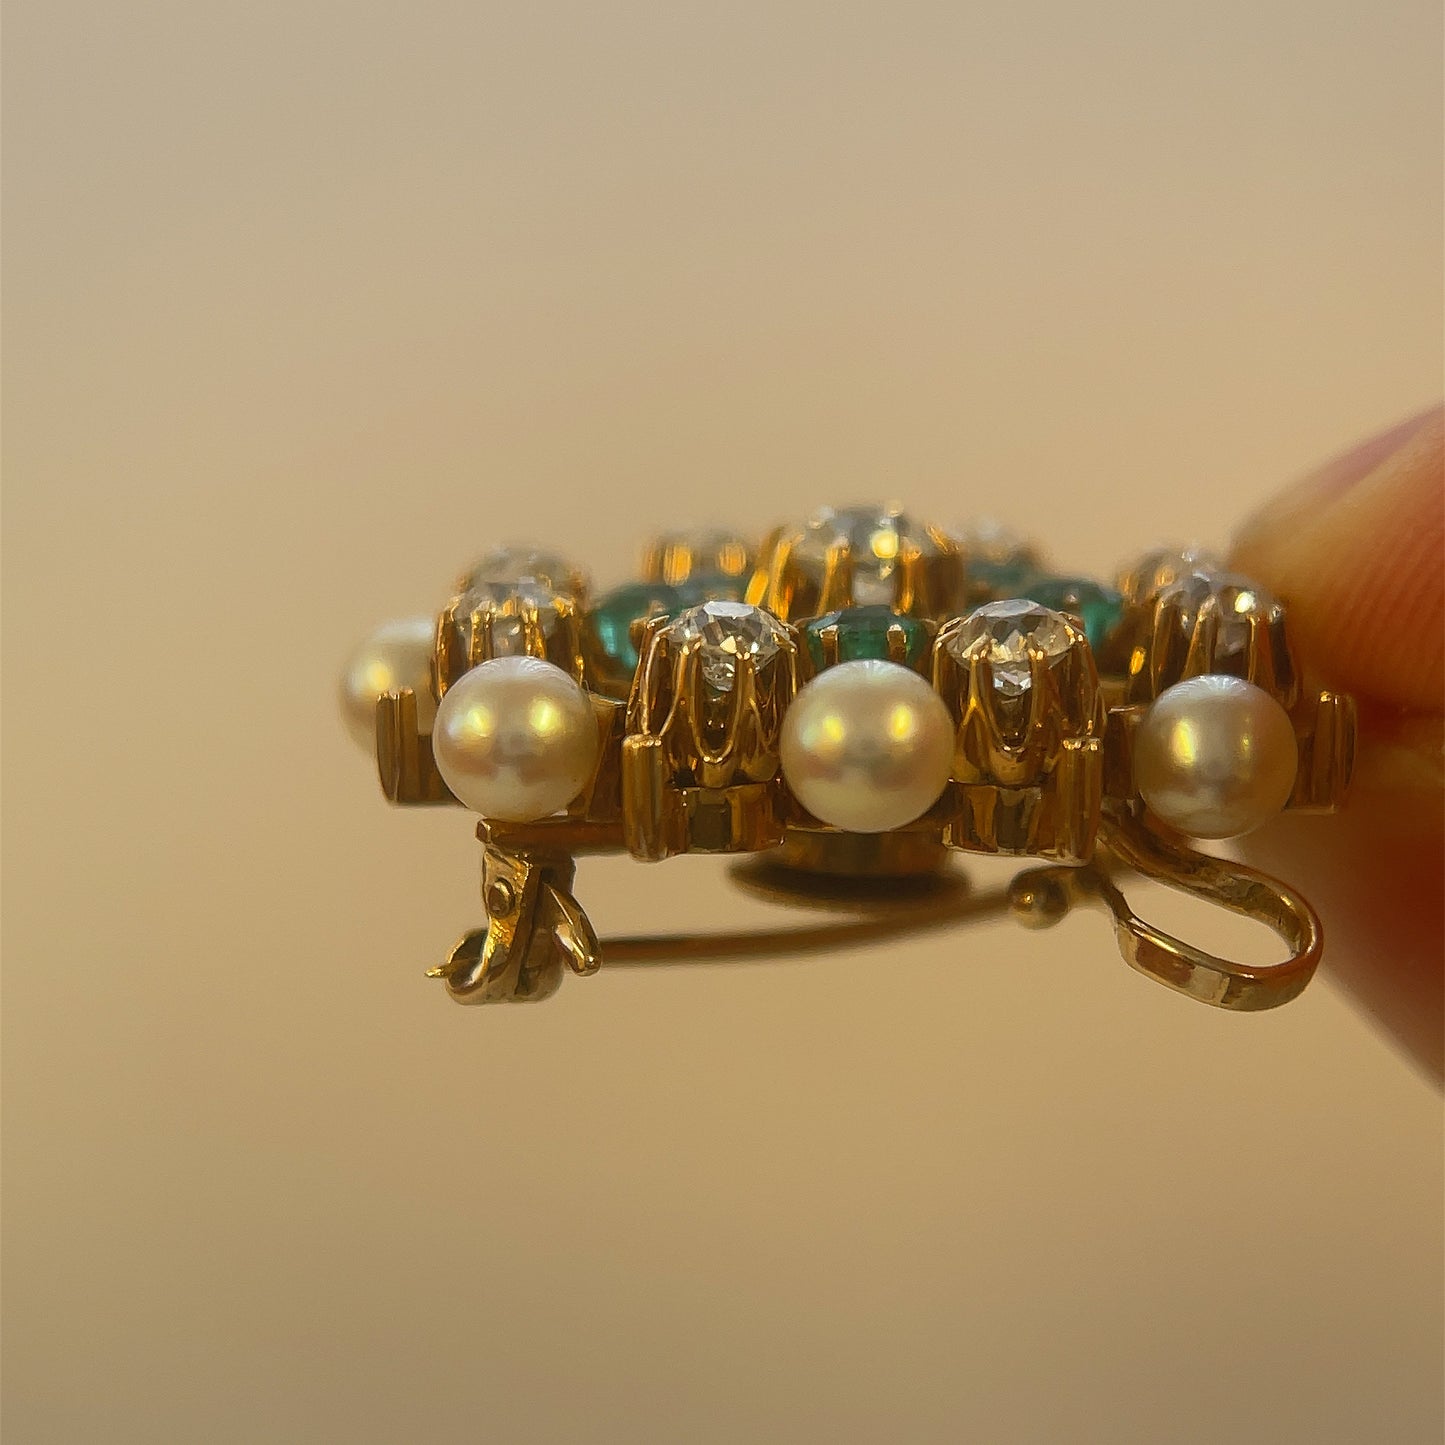 Victorian (Circa 1880s) 1.50ct Old European Cut Diamonds 1ct Emeralds & Natural Pearl 14KY Antique Pendant/Necklace